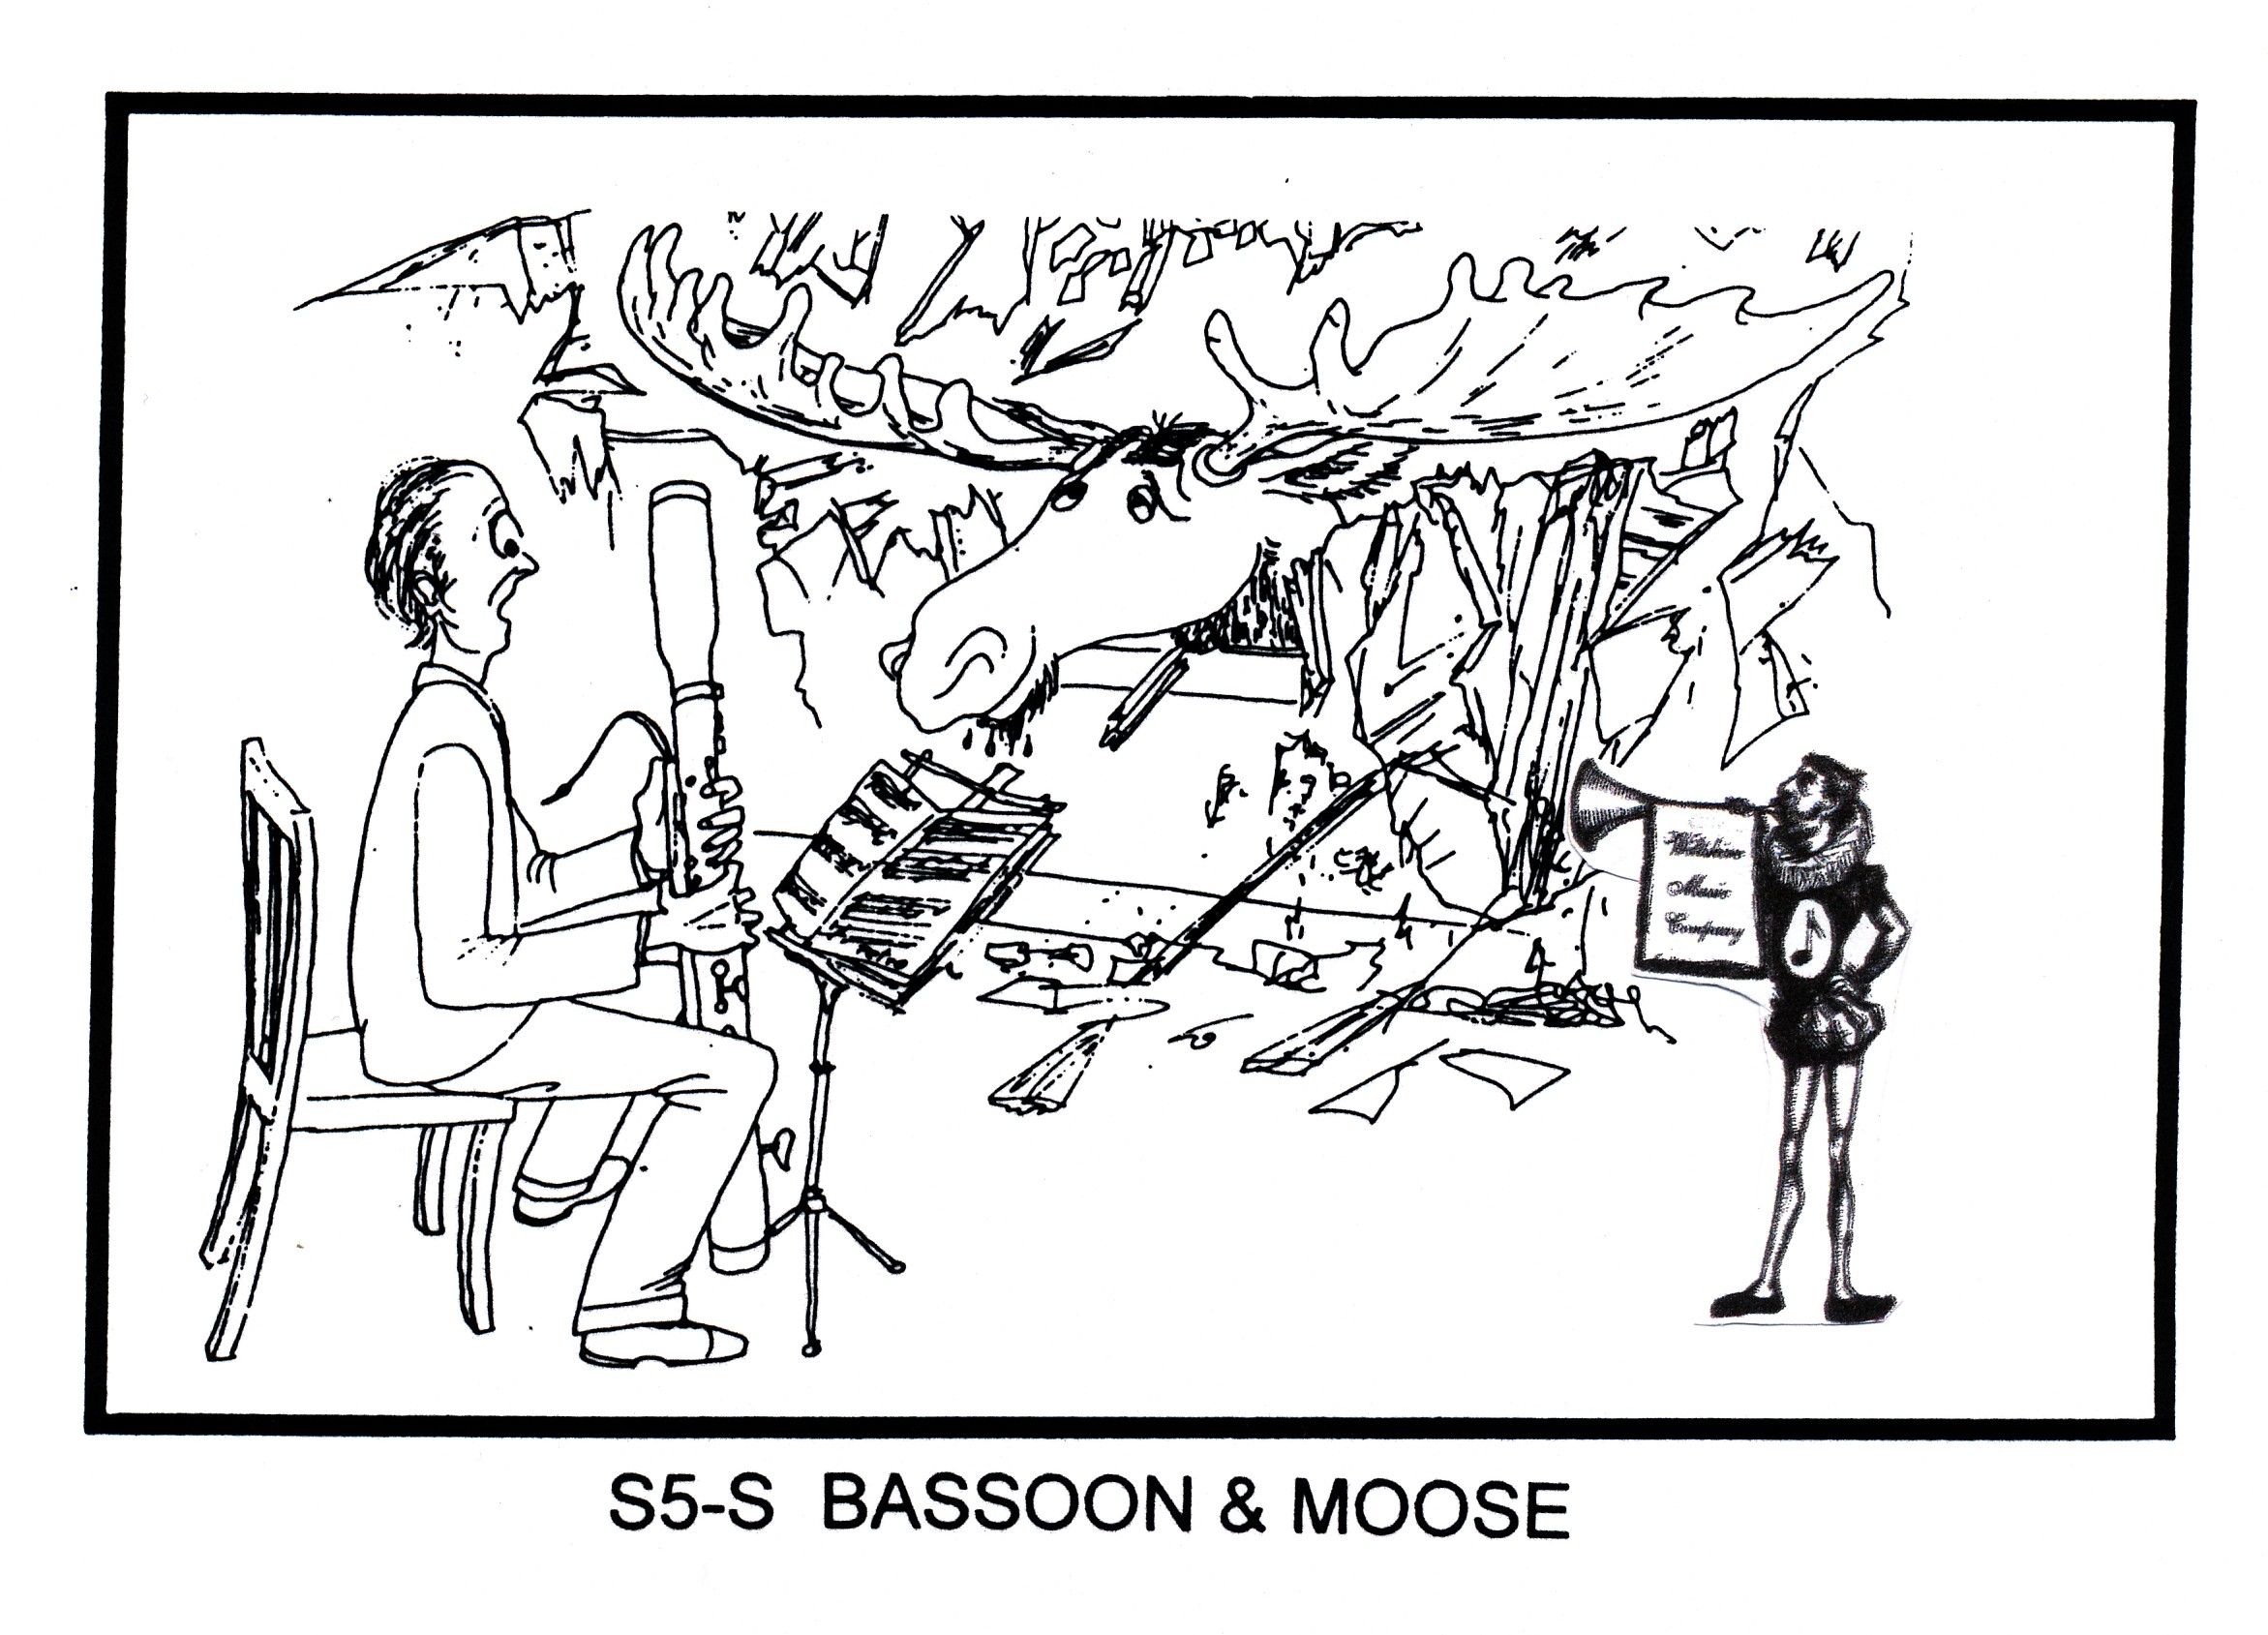 Bassoon Player & Moose